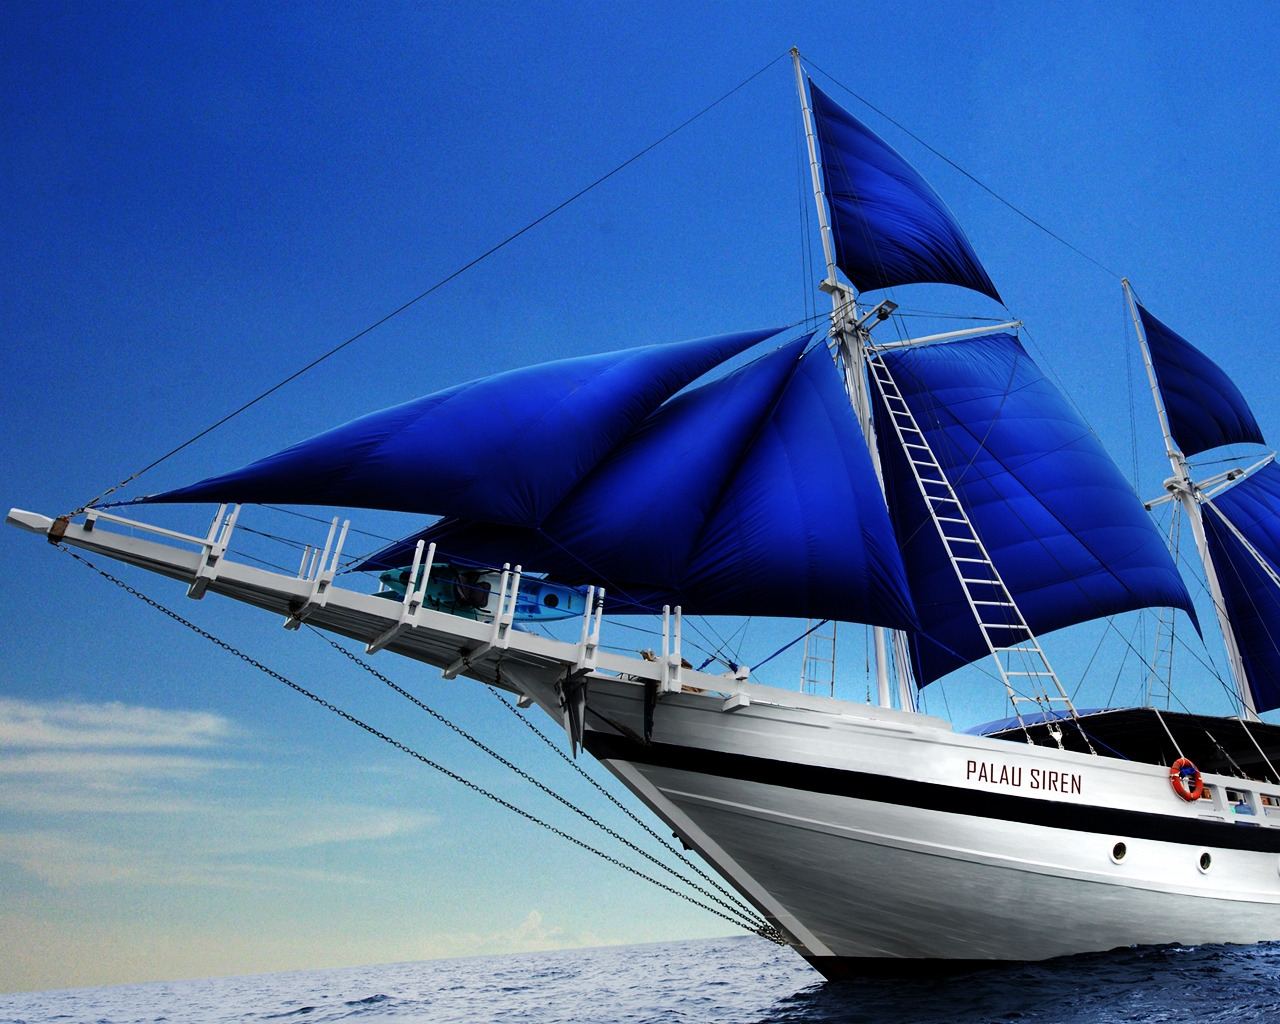 Palau Siren Boat for 1280 x 1024 resolution